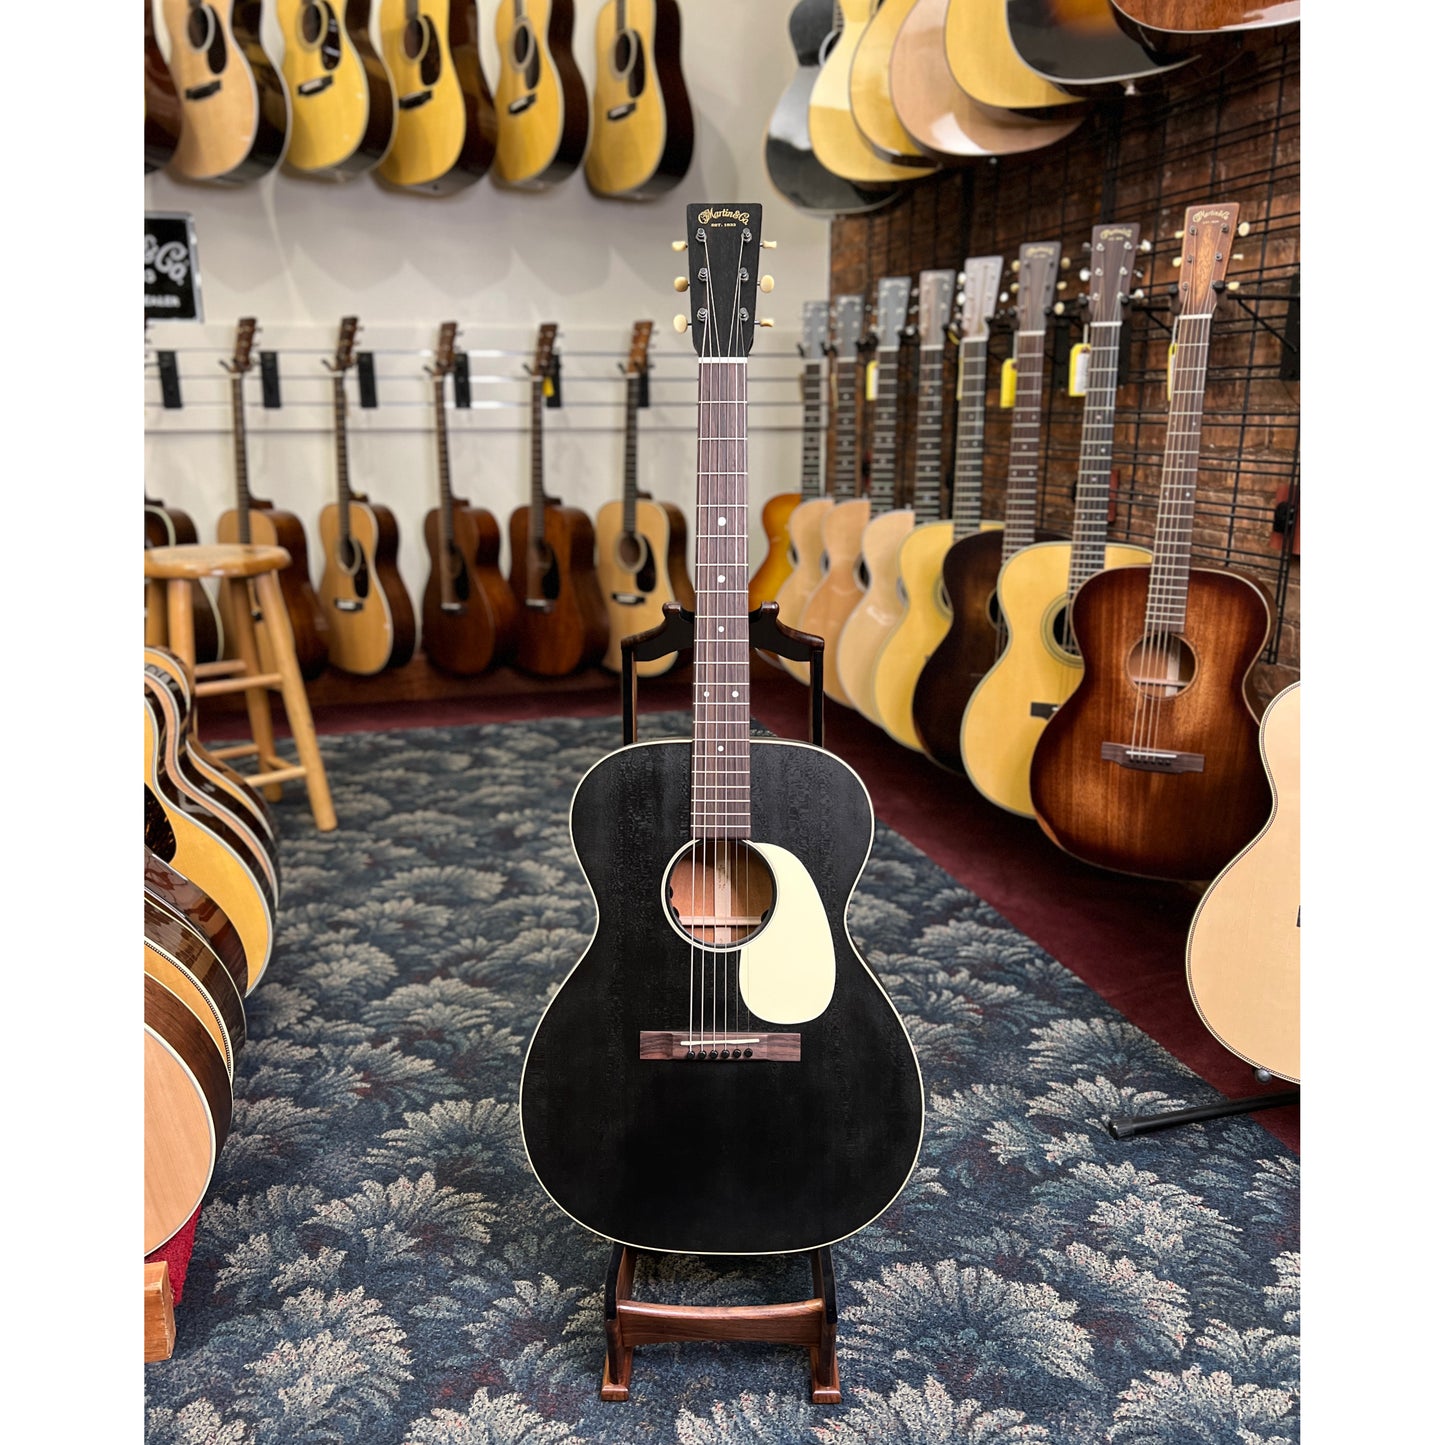 Martin 000-17E Black Smoke Guitar with Pickup & Gigbag